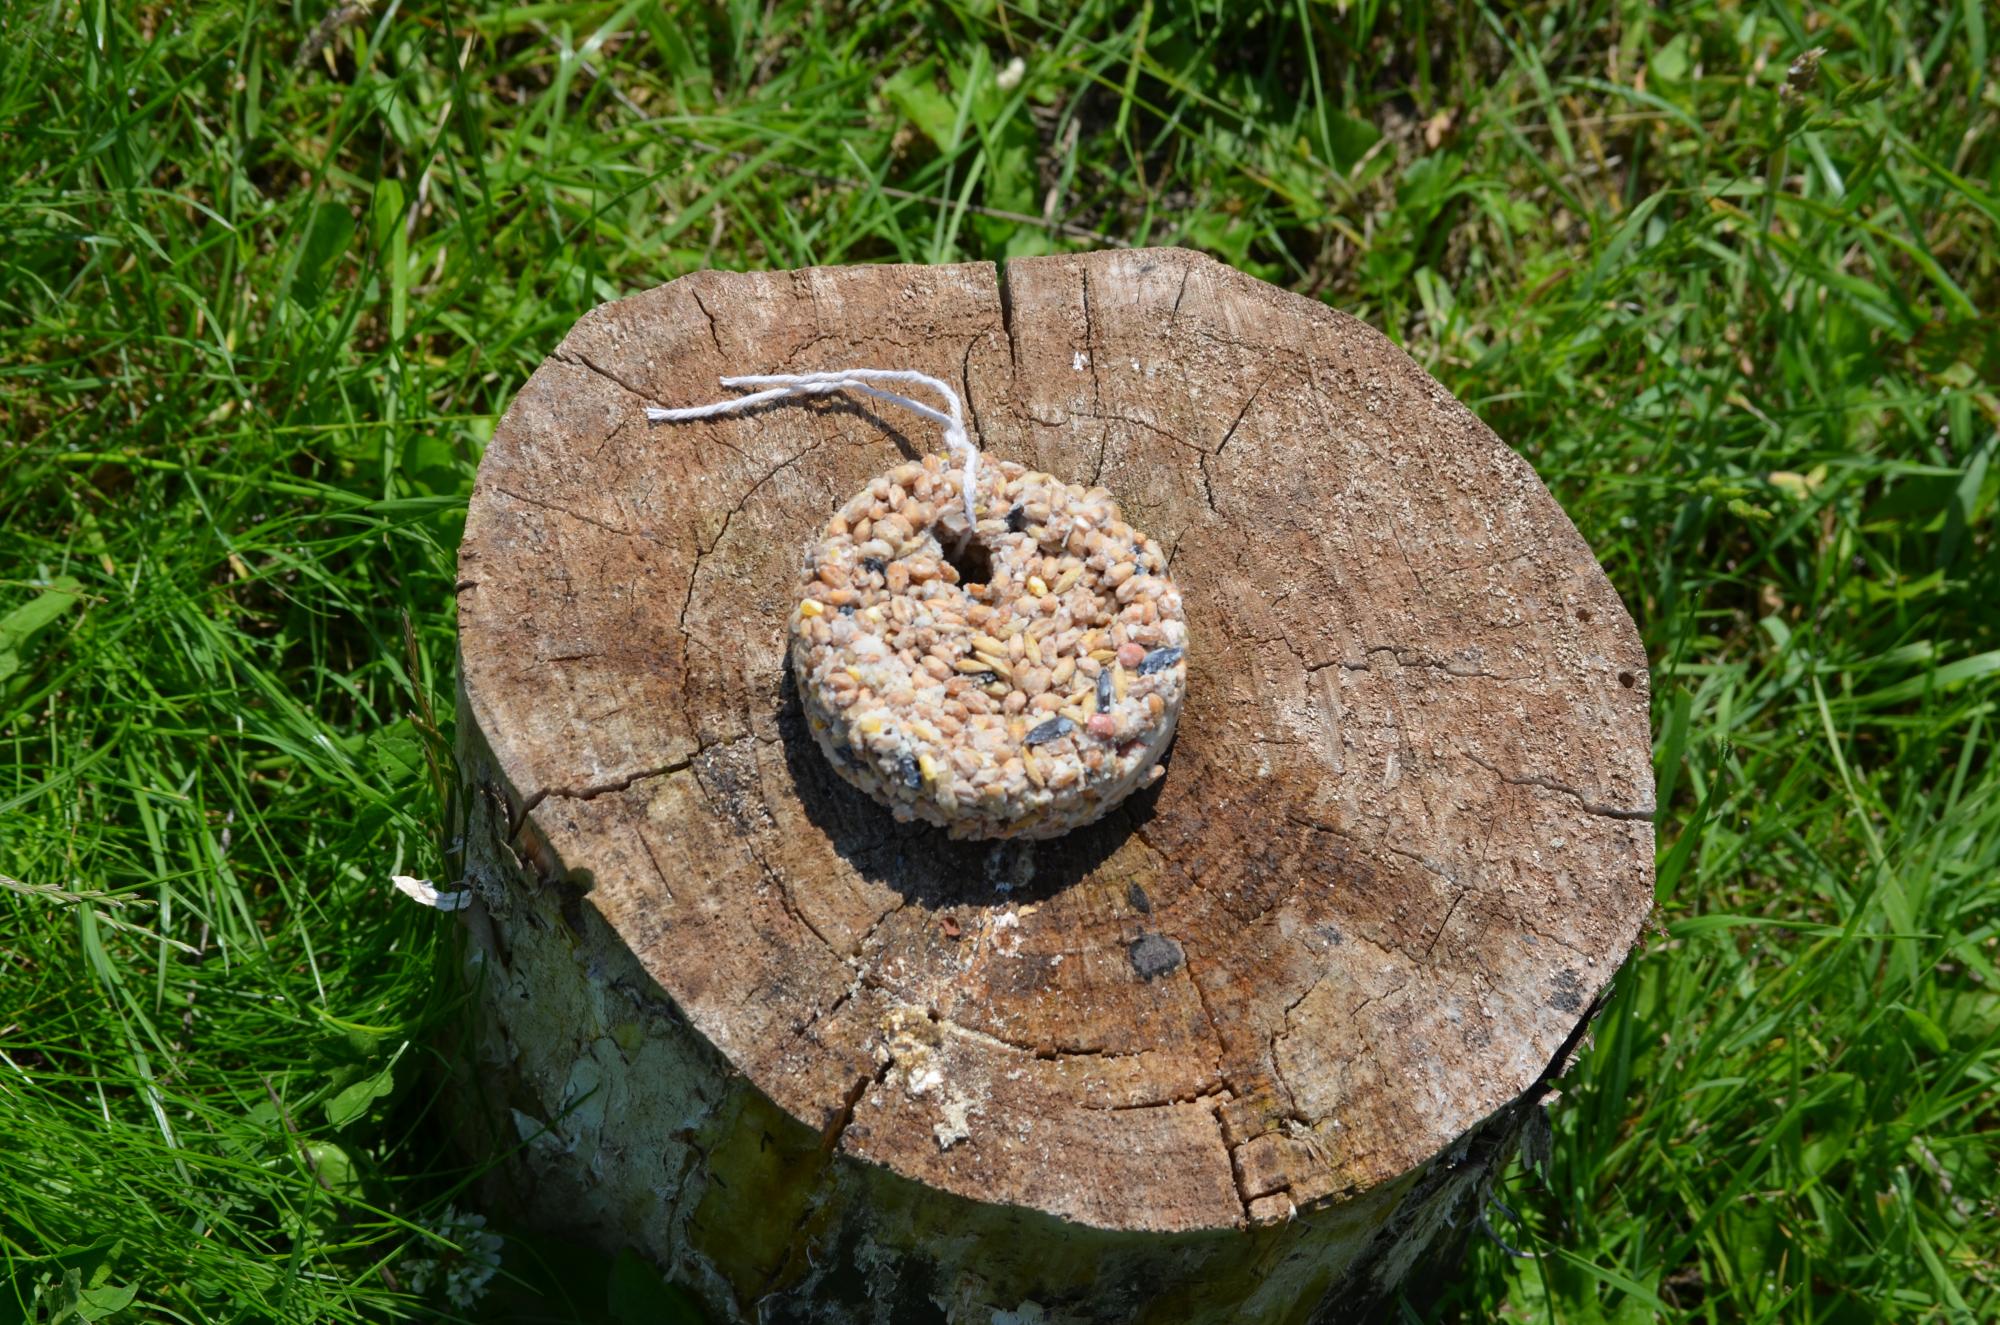 Close up of a handmade bird feeder with string through it